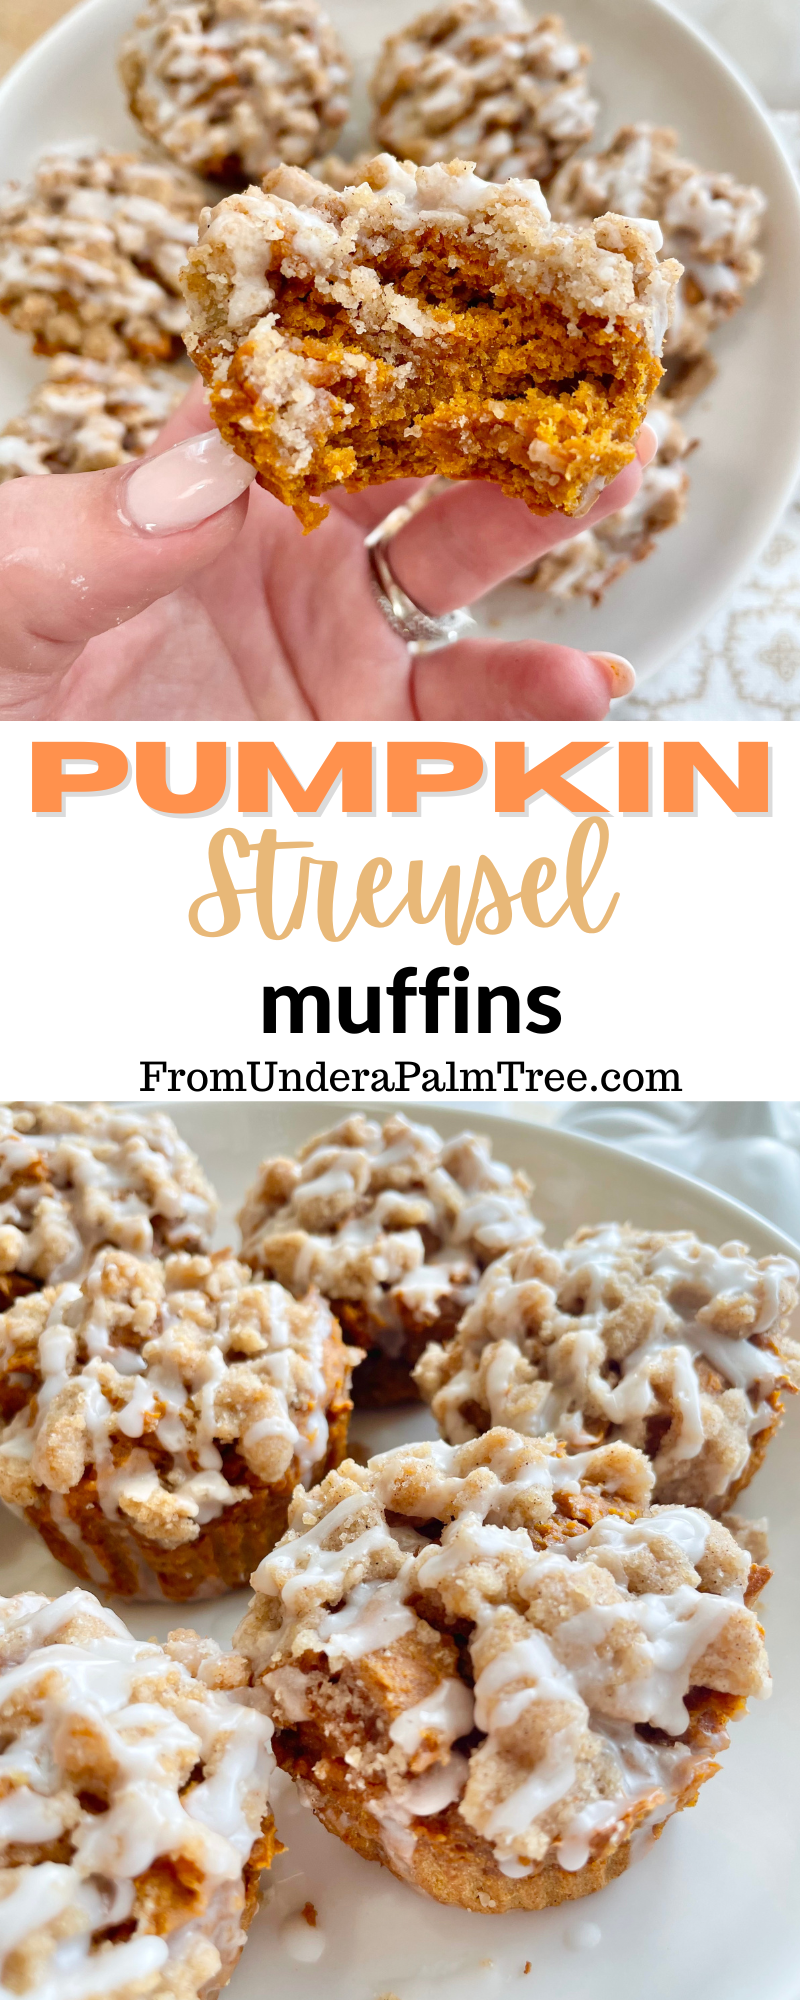 pumpkin muffins | easy pumpkin muffins | pumpkin streusel muffins | easy pumpkin muffin recipe | pumpkin bread | pumpkin recipes | pumpkin | foods for fall | muffin recipe | how to make pumpkin muffins quickly | simple pumpkin muffins | 